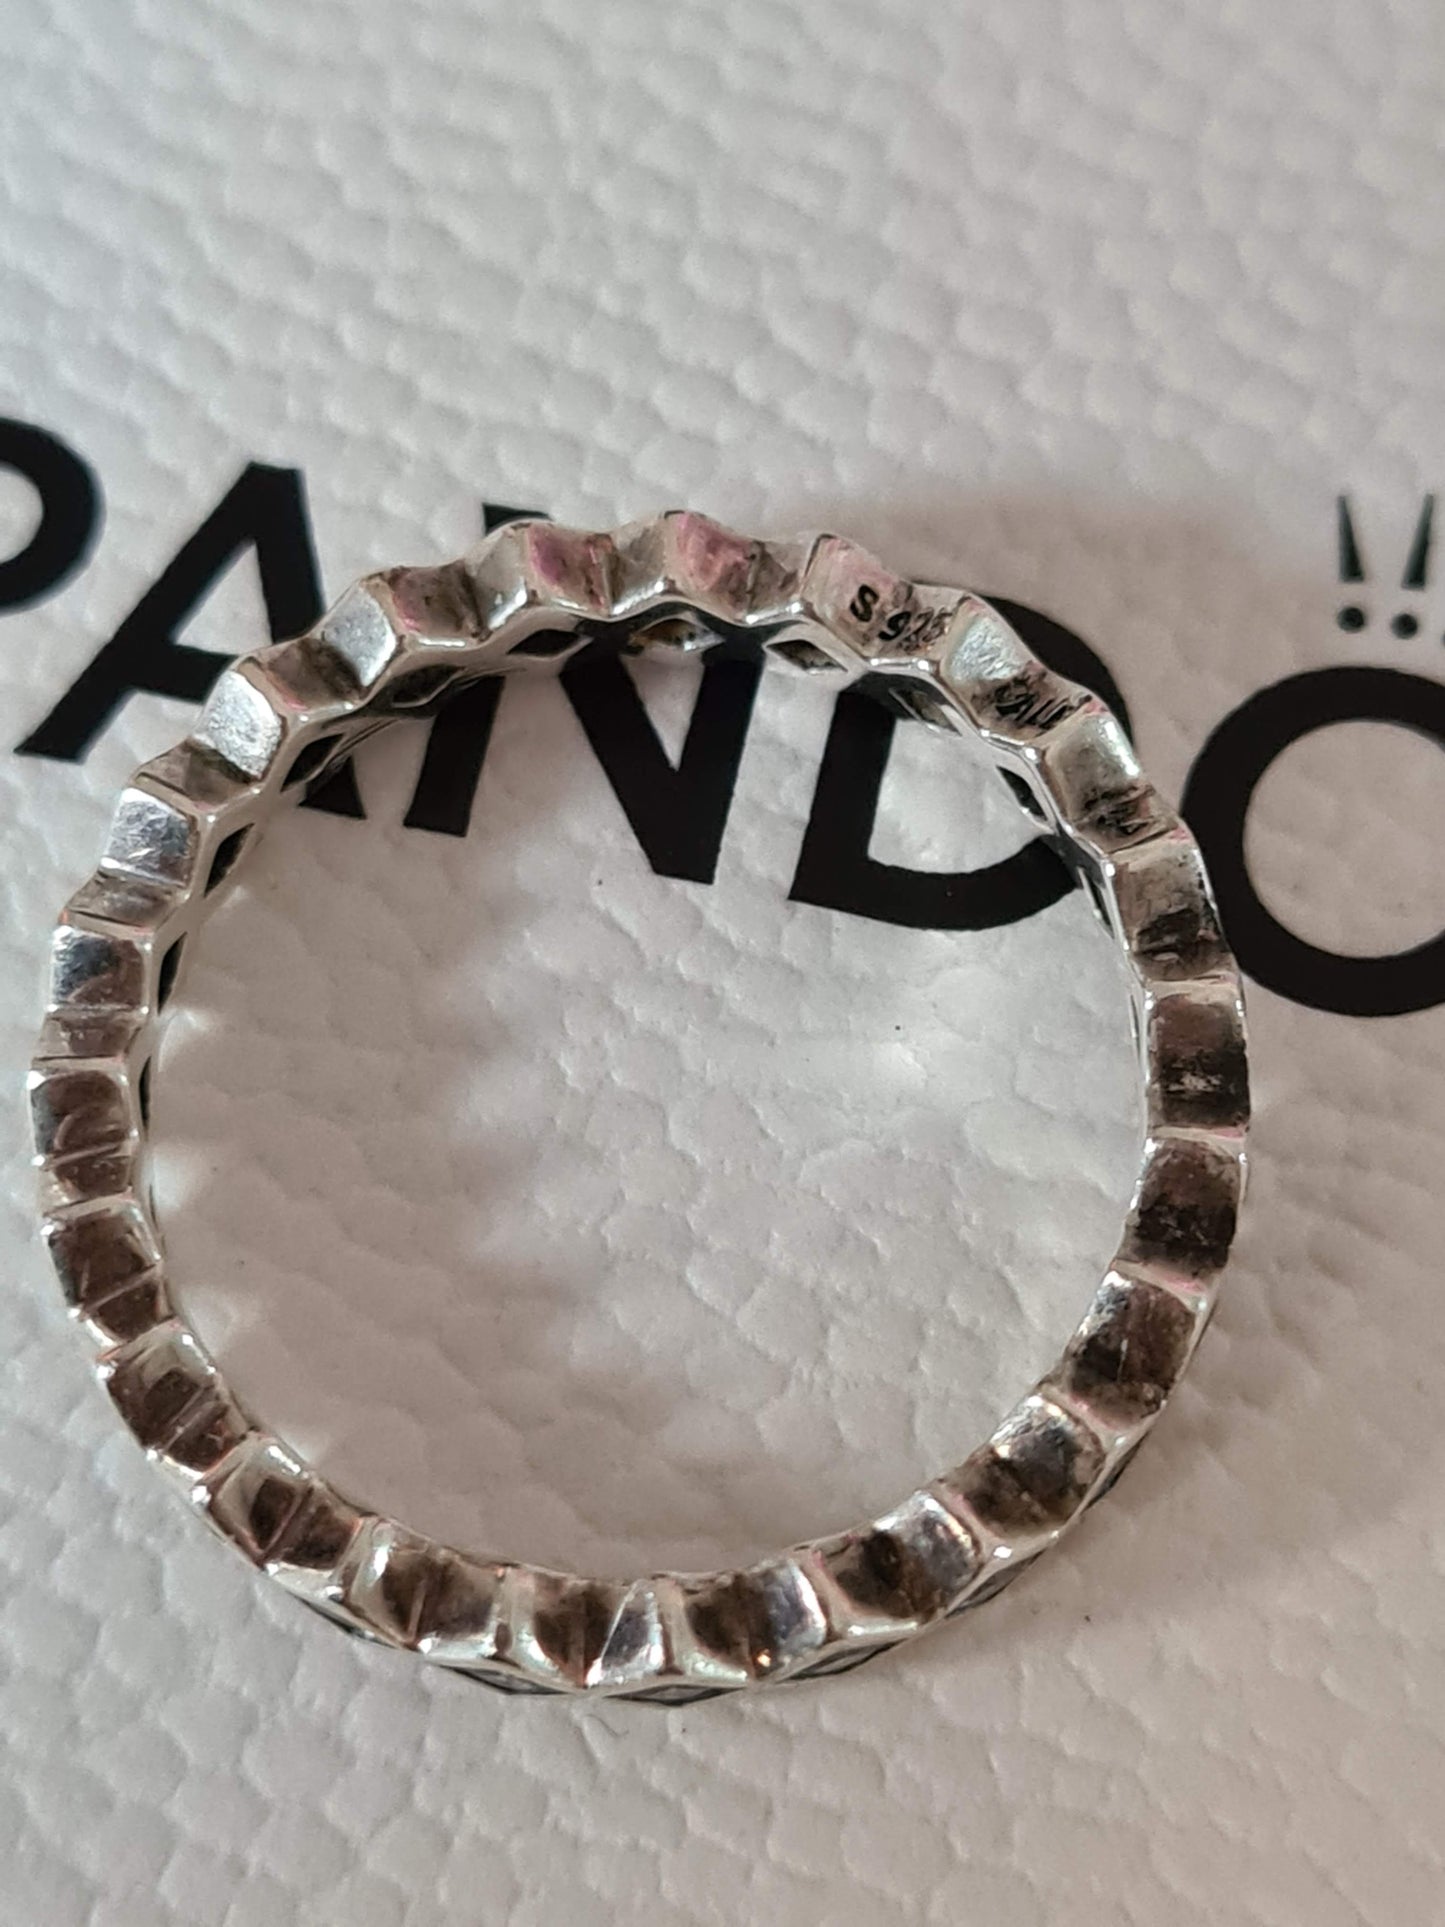 Genuine Pandora Diamond Pave CZ Eternity Band Stacking Ring 52